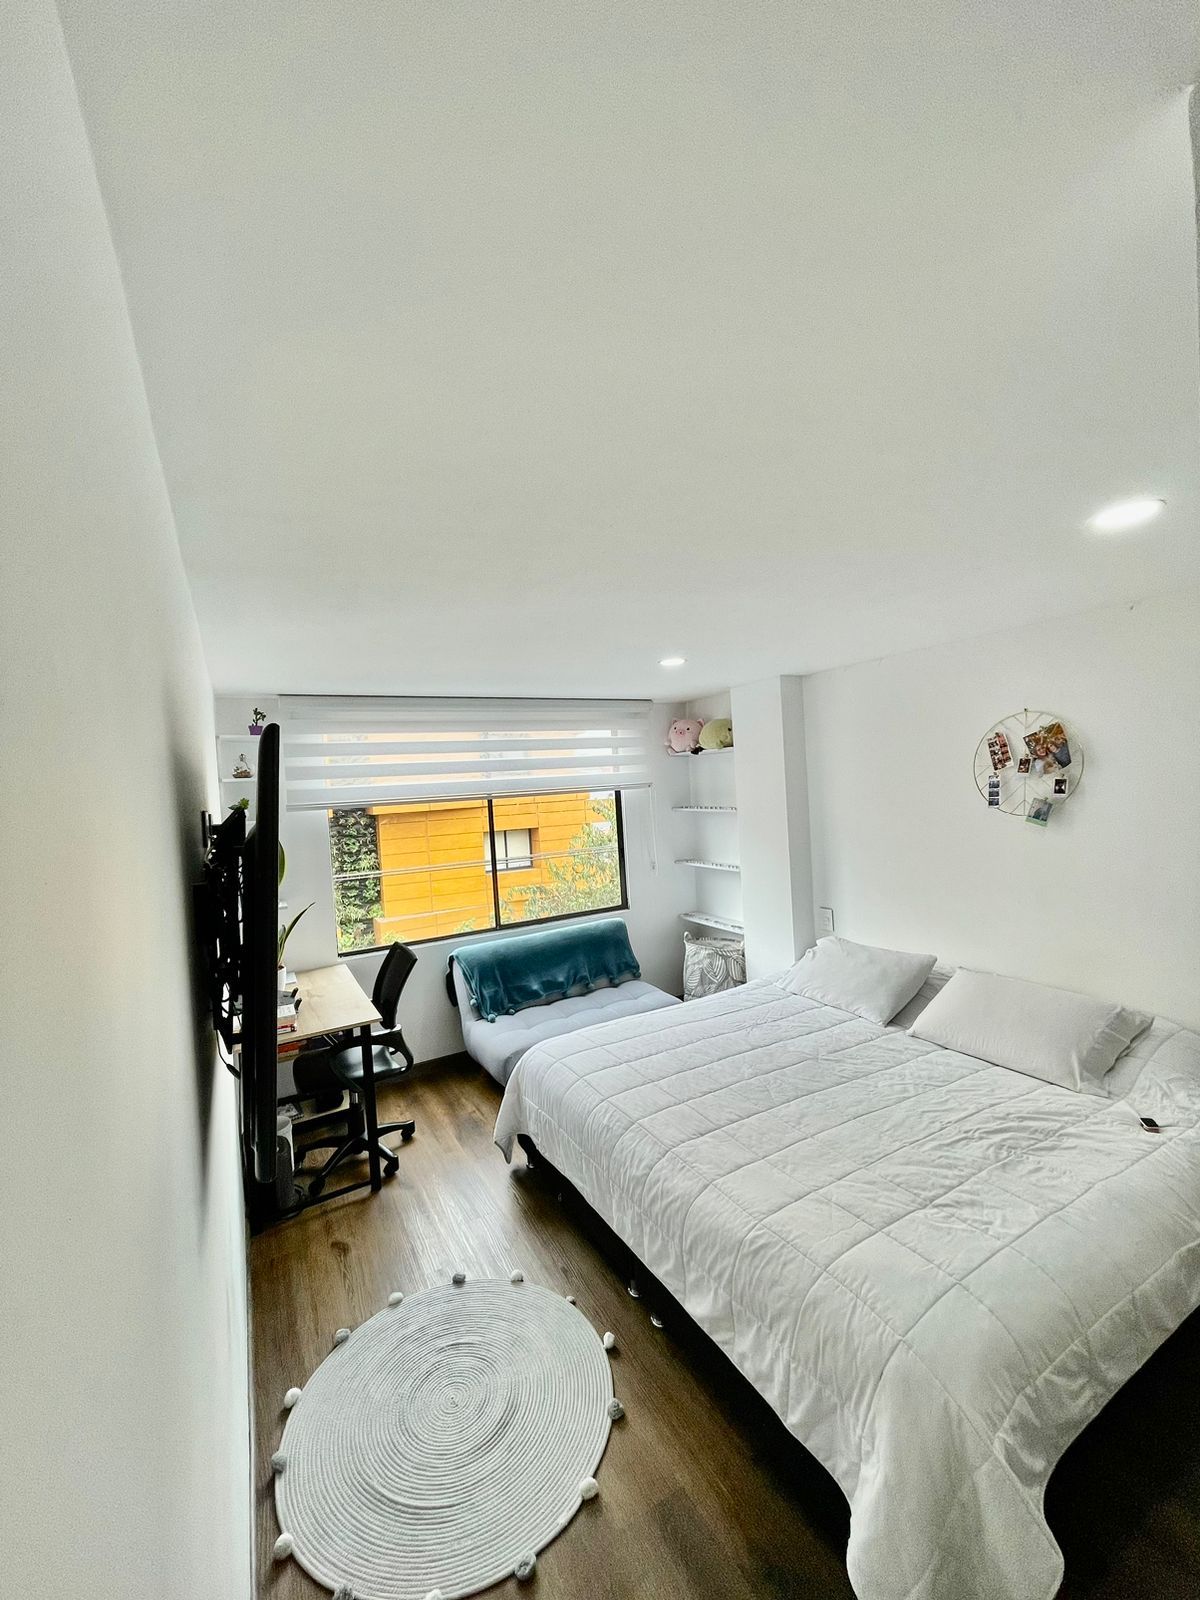 Apartamento en arriendo Lisboa 97 m² - $ 3.400.000